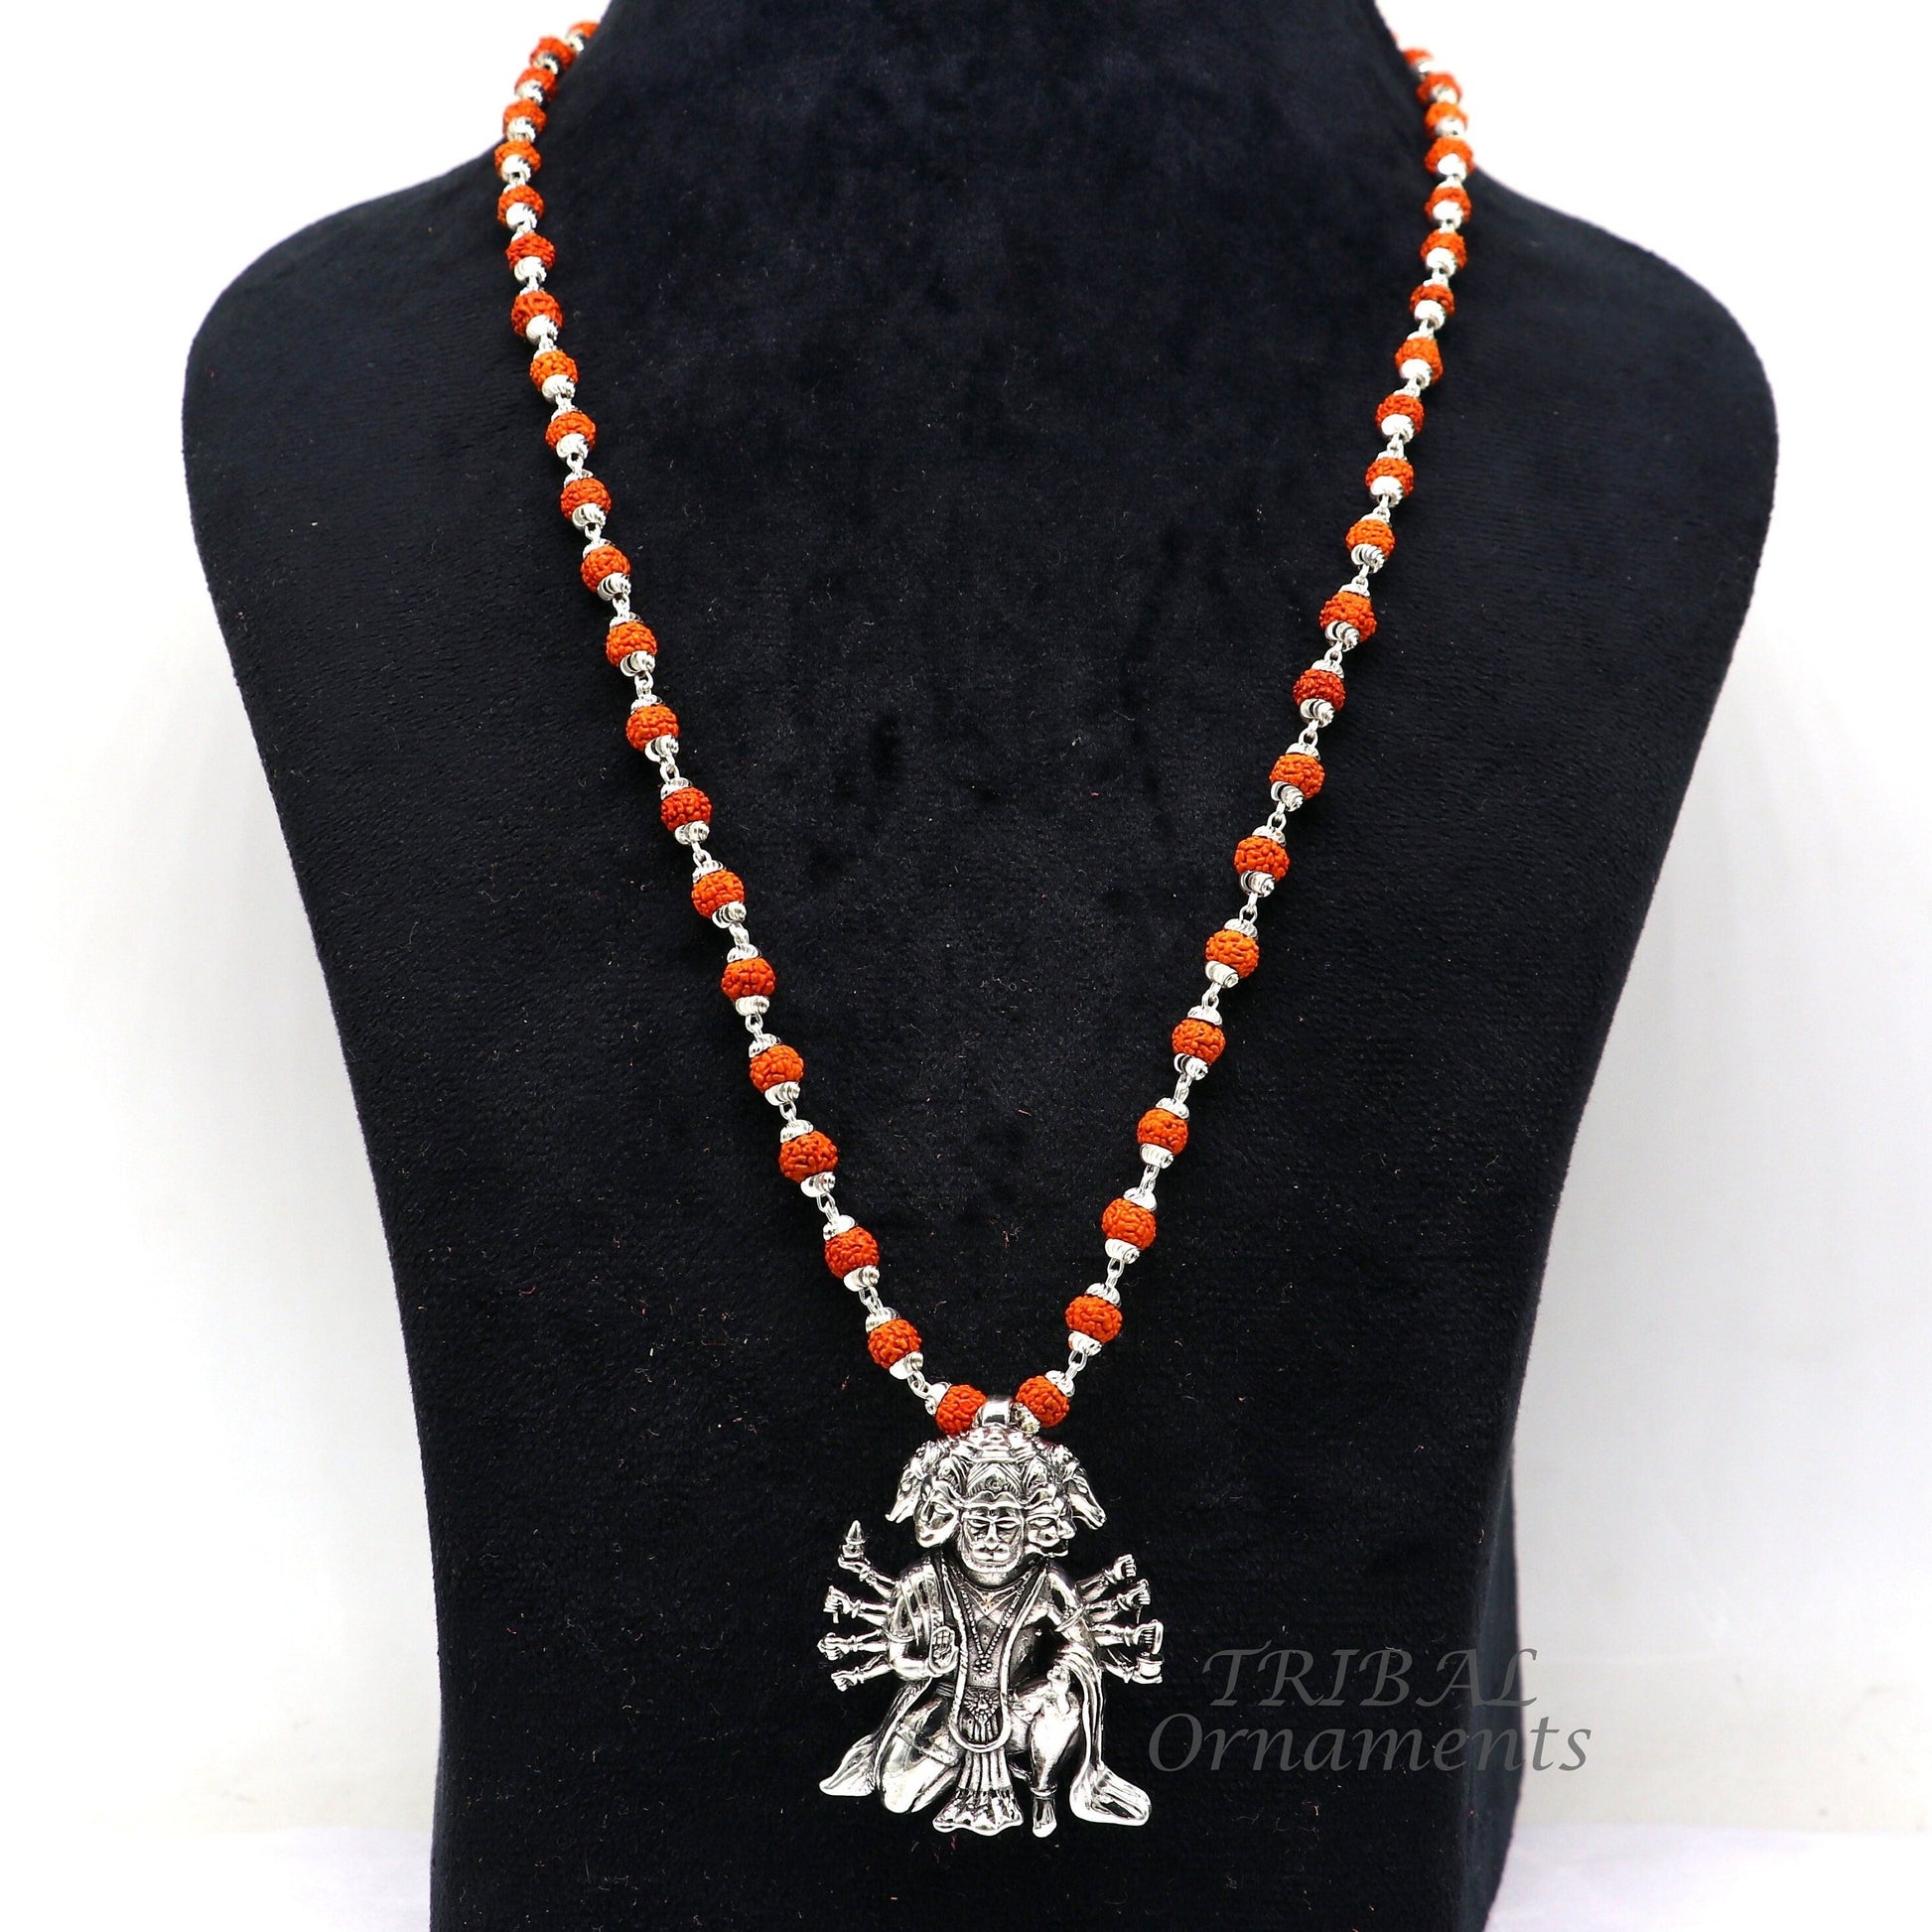 925 sterling silver handmade Divine Lord Panch mukhi Hanumana five face Hanumana pendant, holy pendant protect from negative energy ss0554 - TRIBAL ORNAMENTS